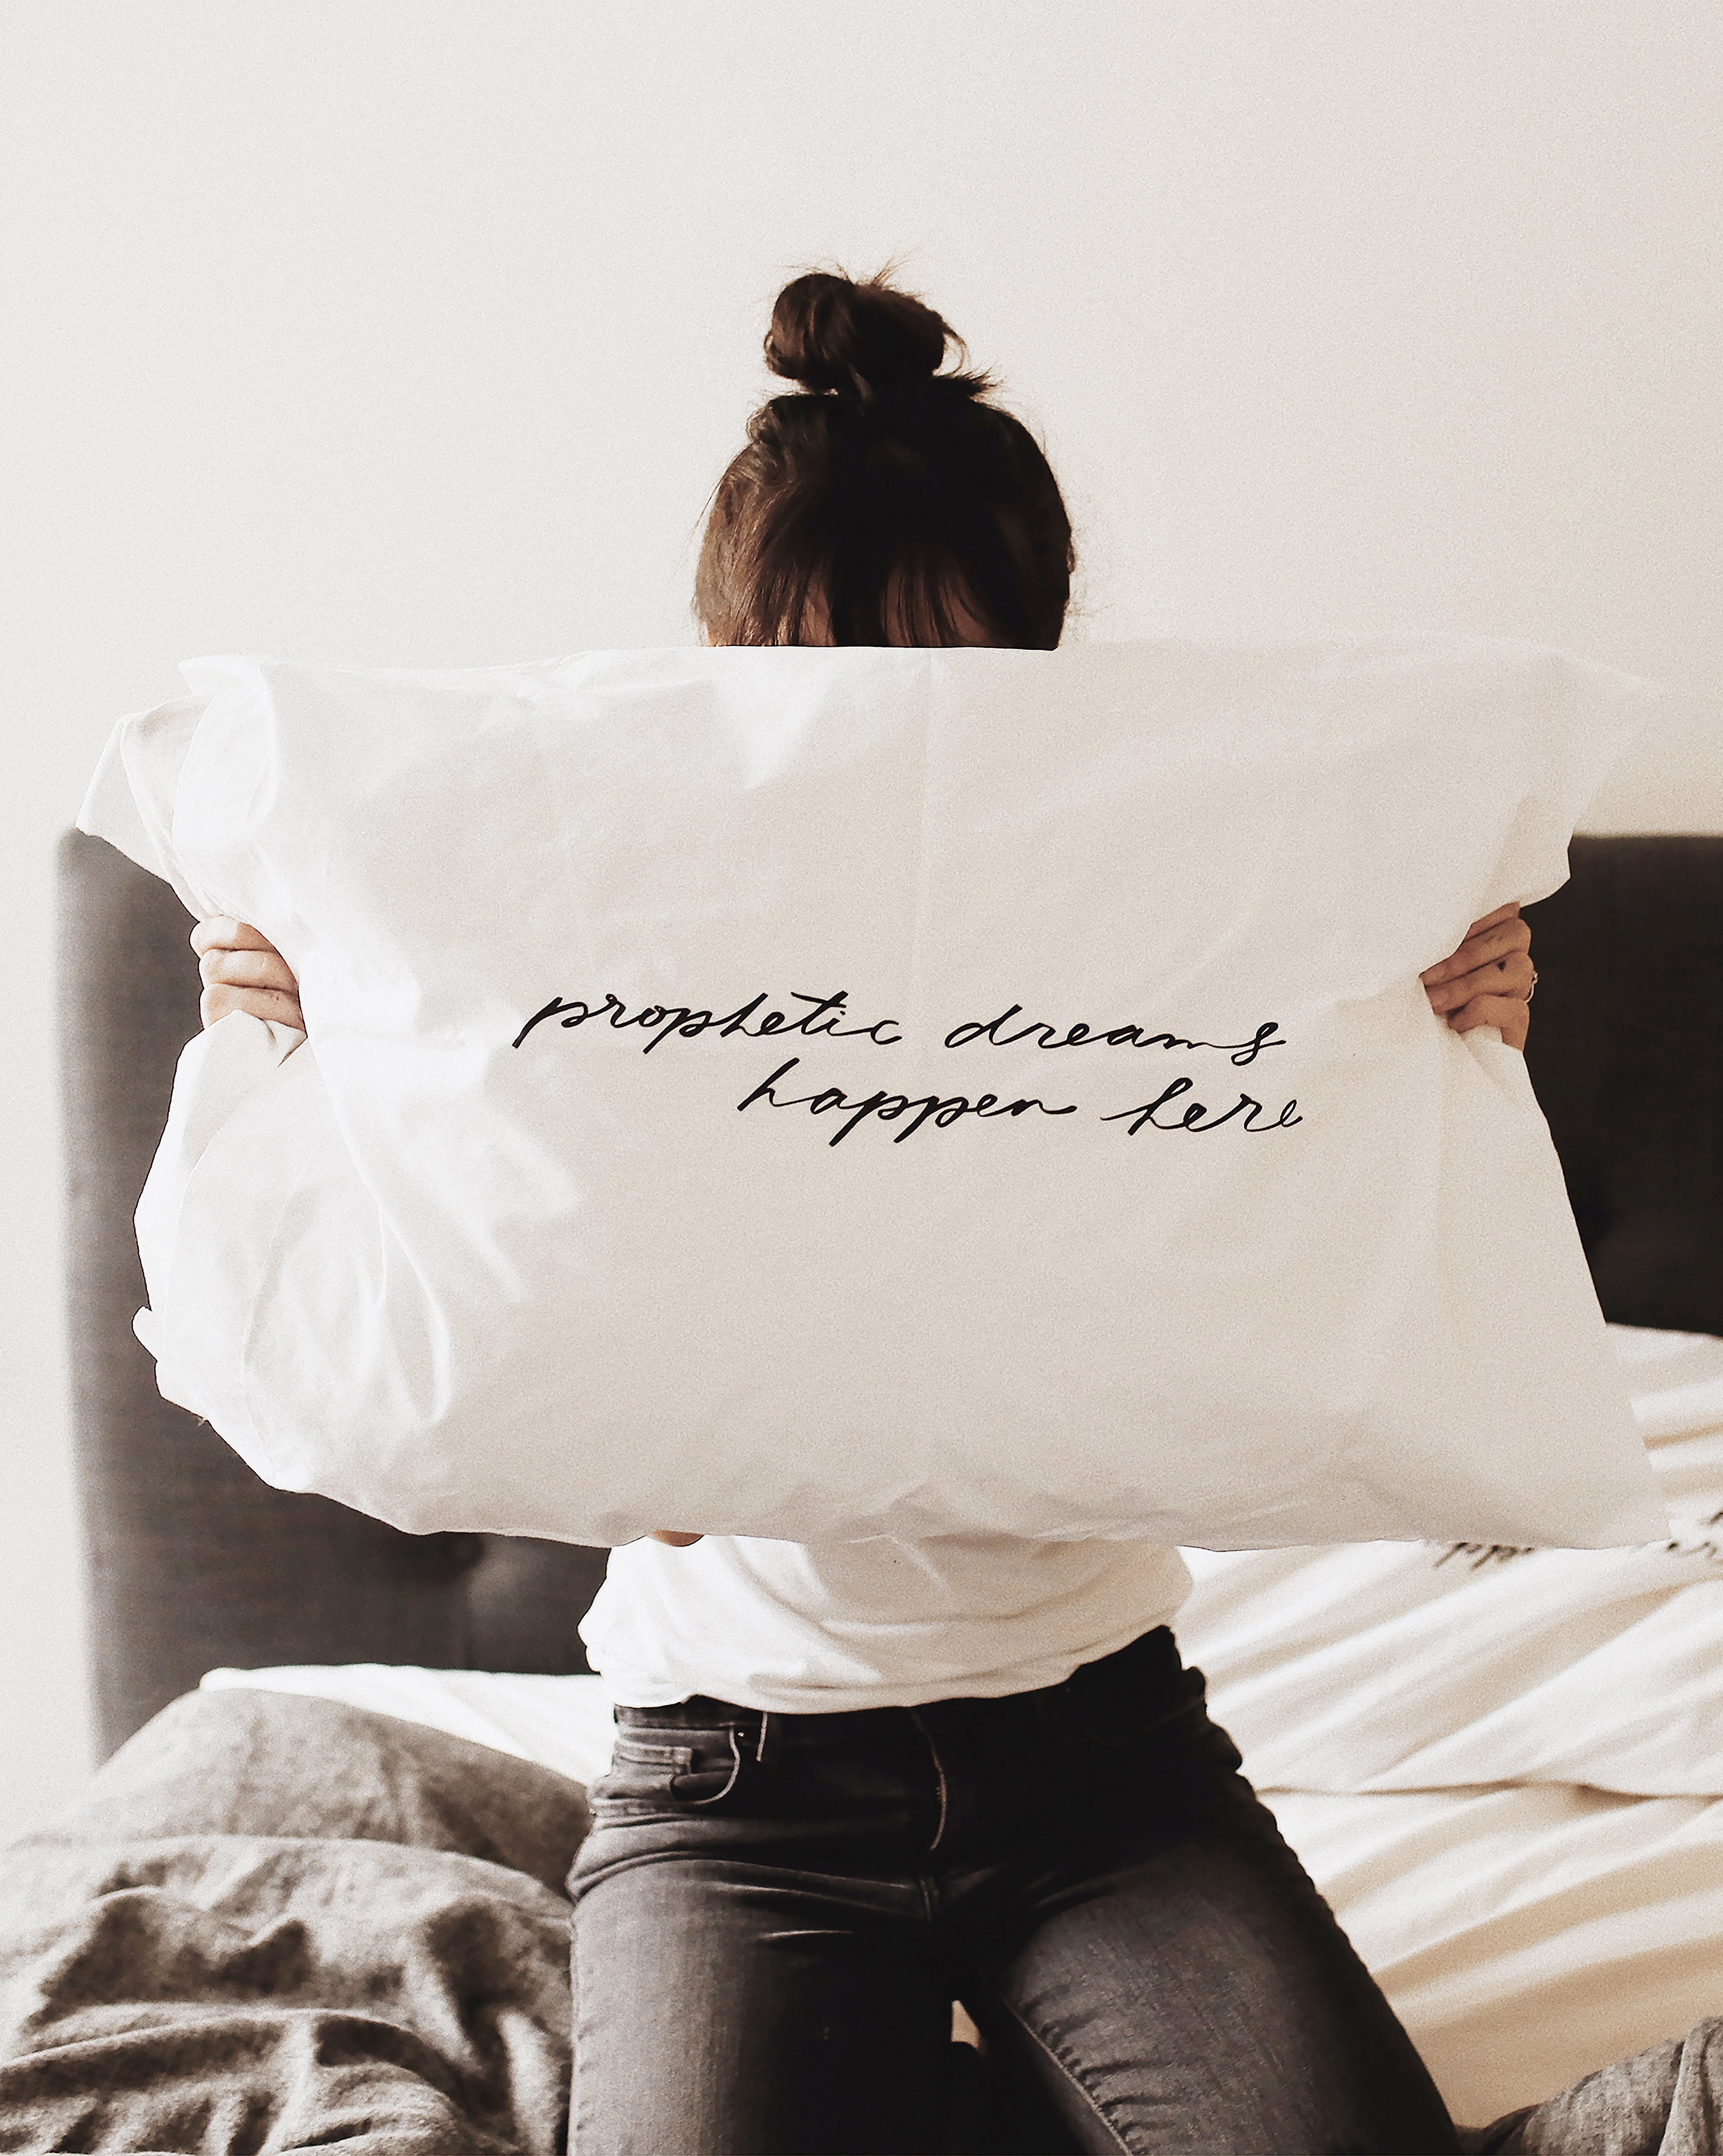 Pillowcases